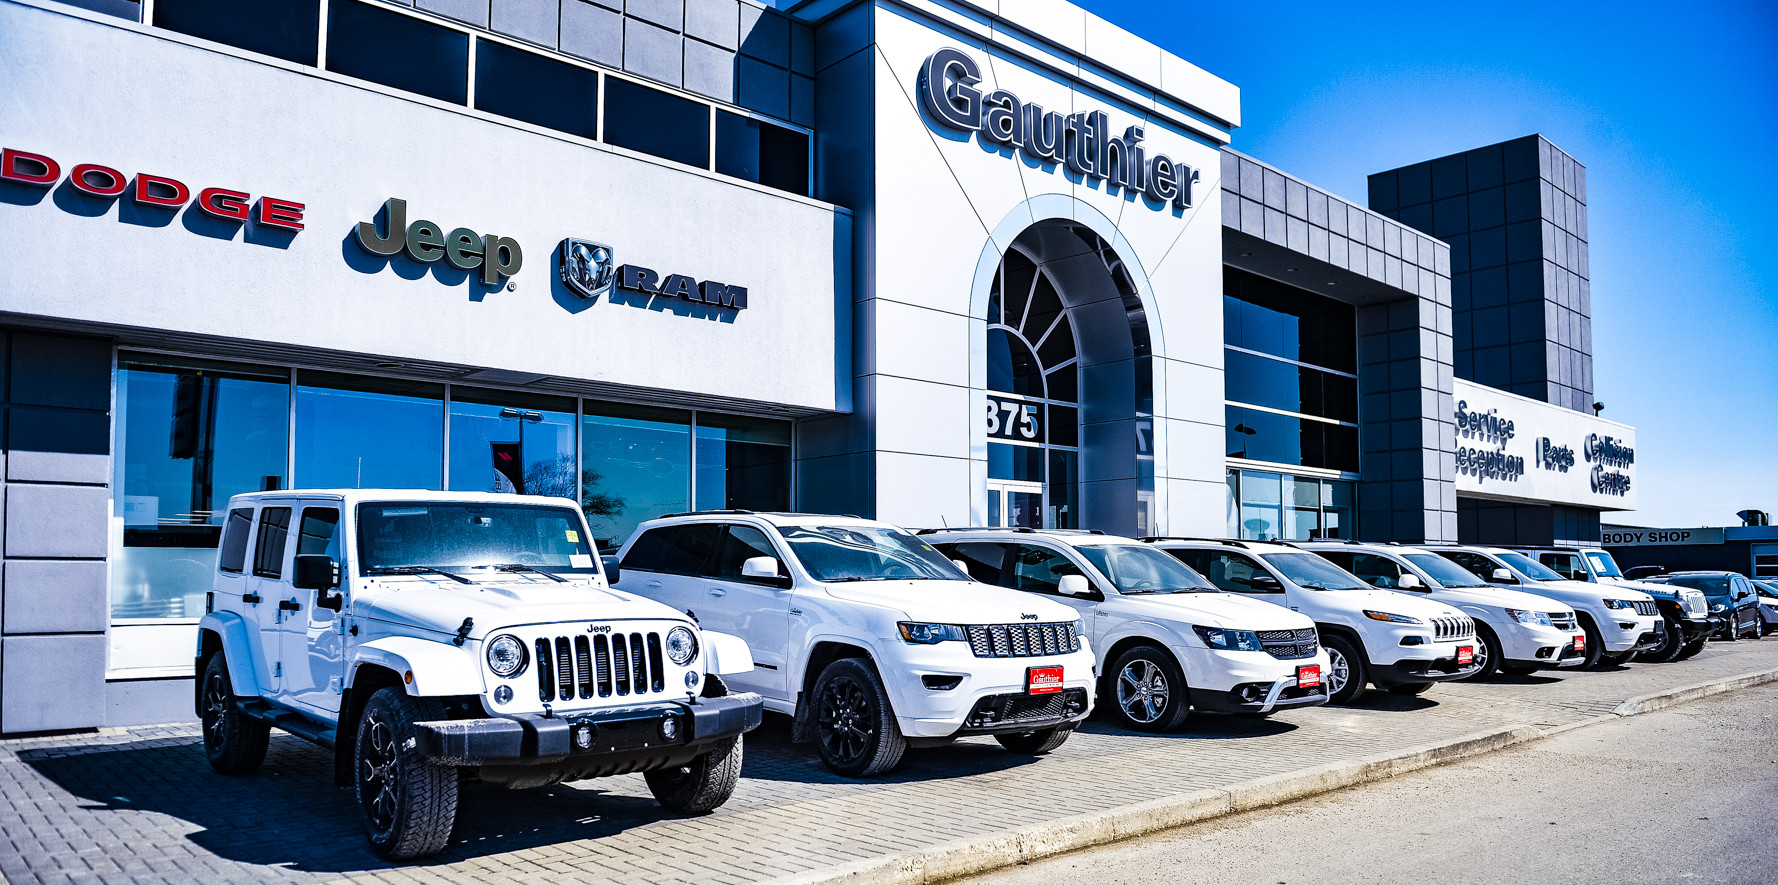 Gauthier Chrysler Dealership image